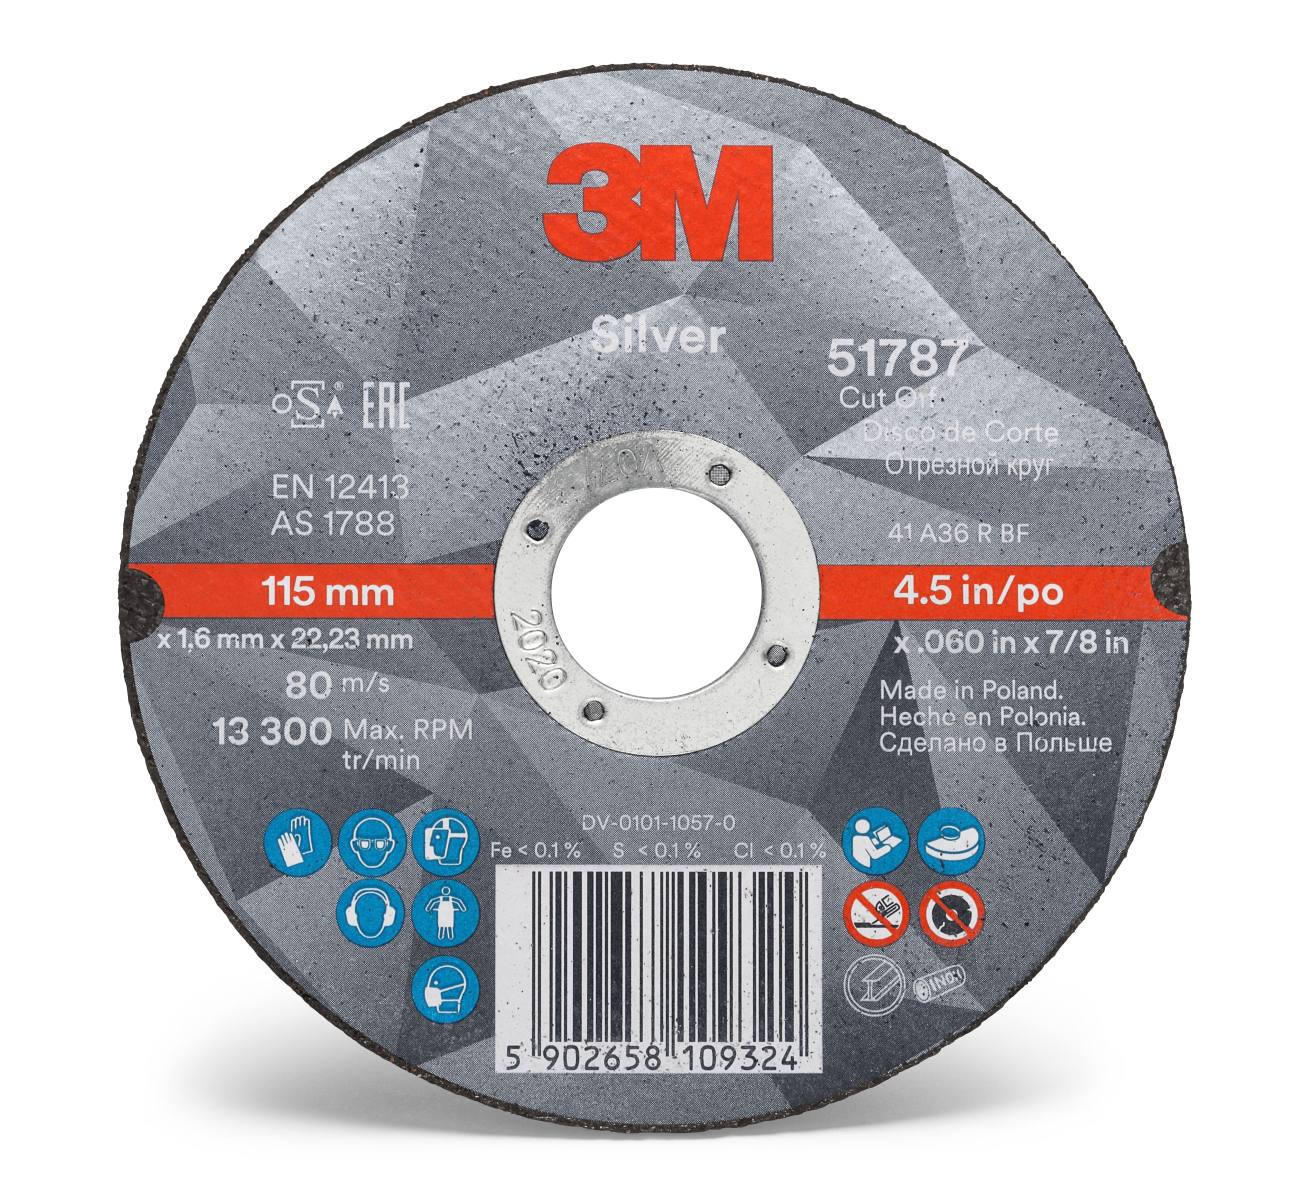 3M Silver Cut-Off Wheel Trennscheibe, 75 mm, 1,6 mm, 10 mm, T41, 51769